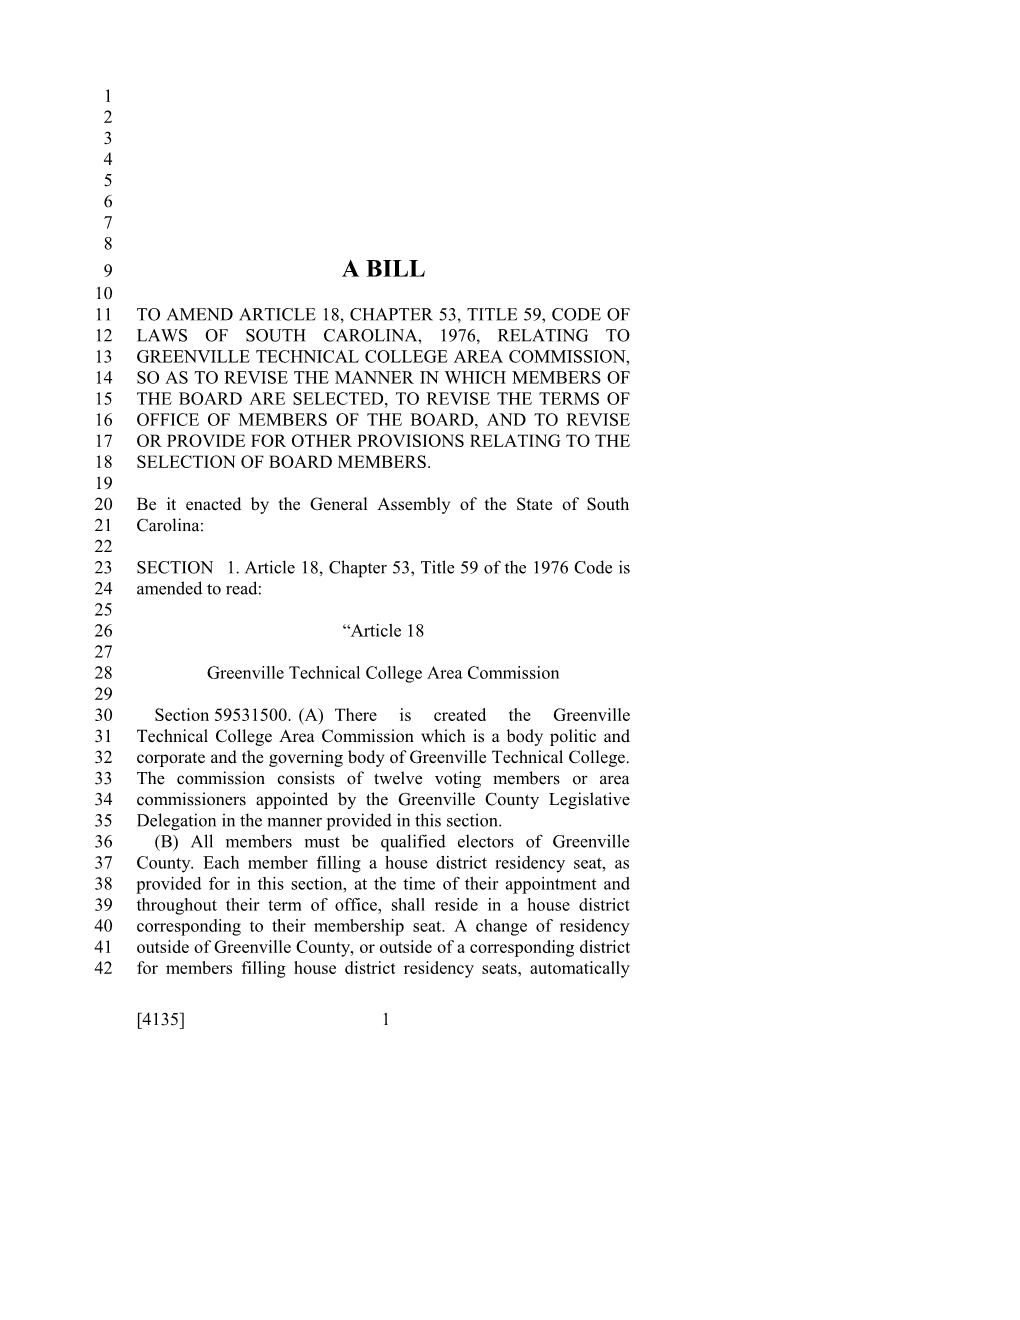 2015-2016 Bill 4135 Text of Previous Version (May 6, 2015) - South Carolina Legislature Online